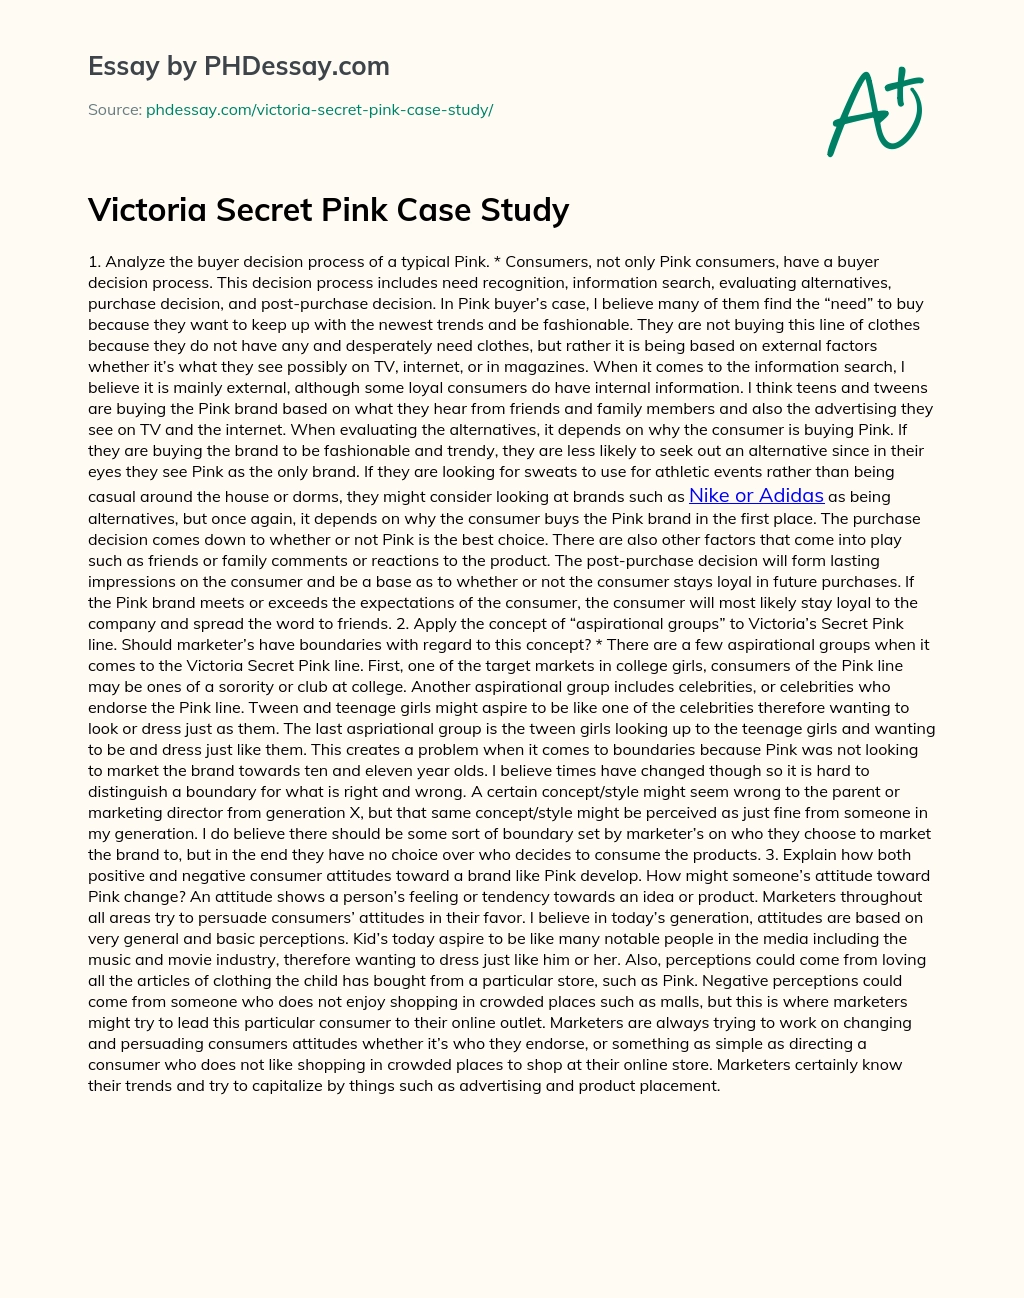 Victoria Secret Pink Case Study essay